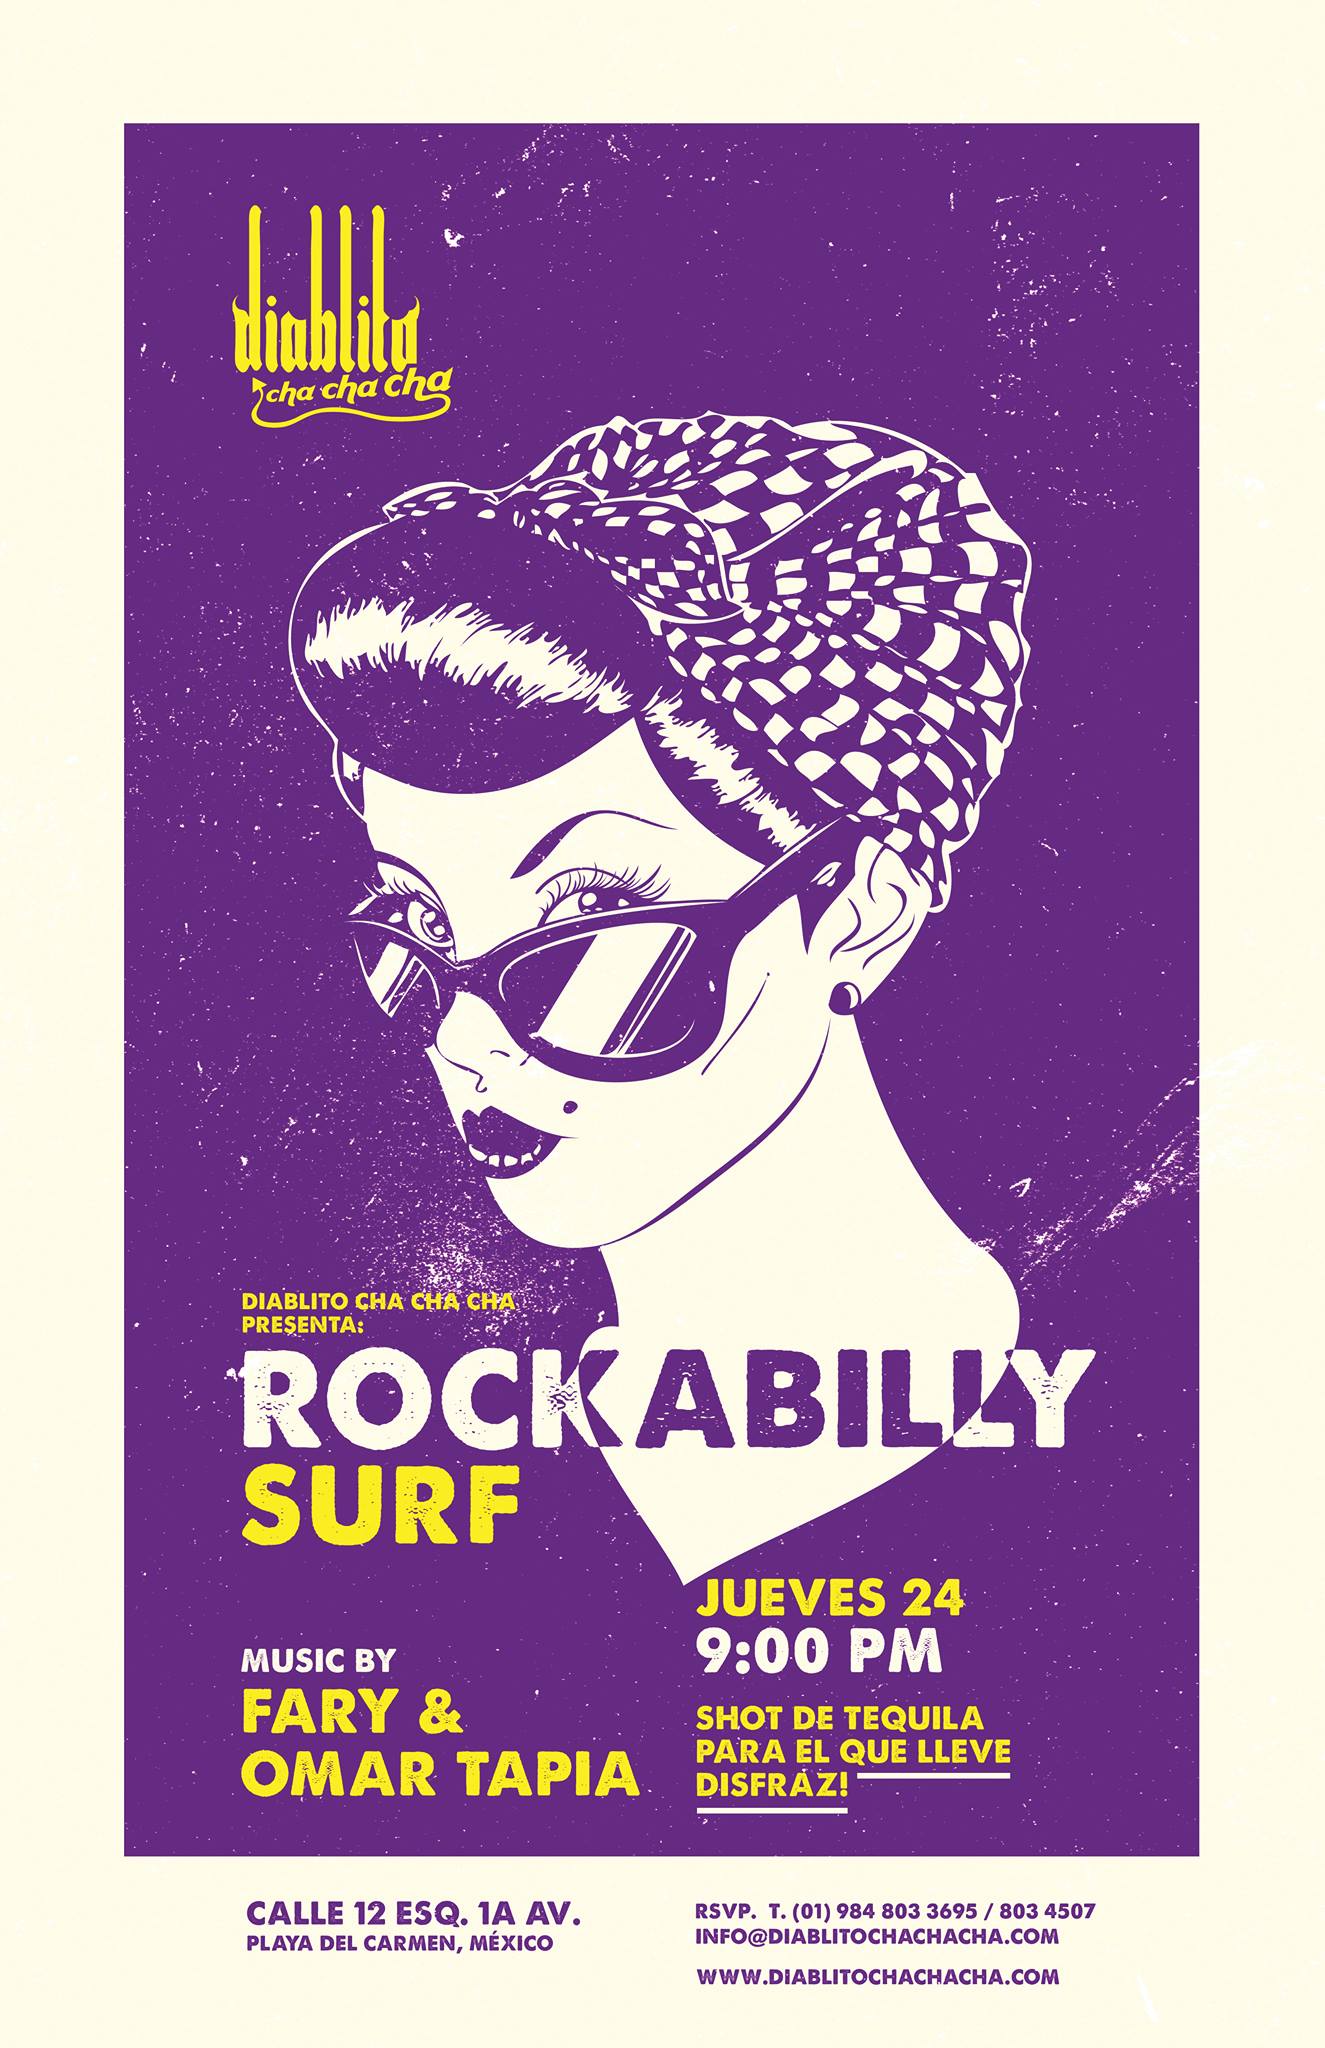 Rockabilly Surf @ Diablito Cha cha cha